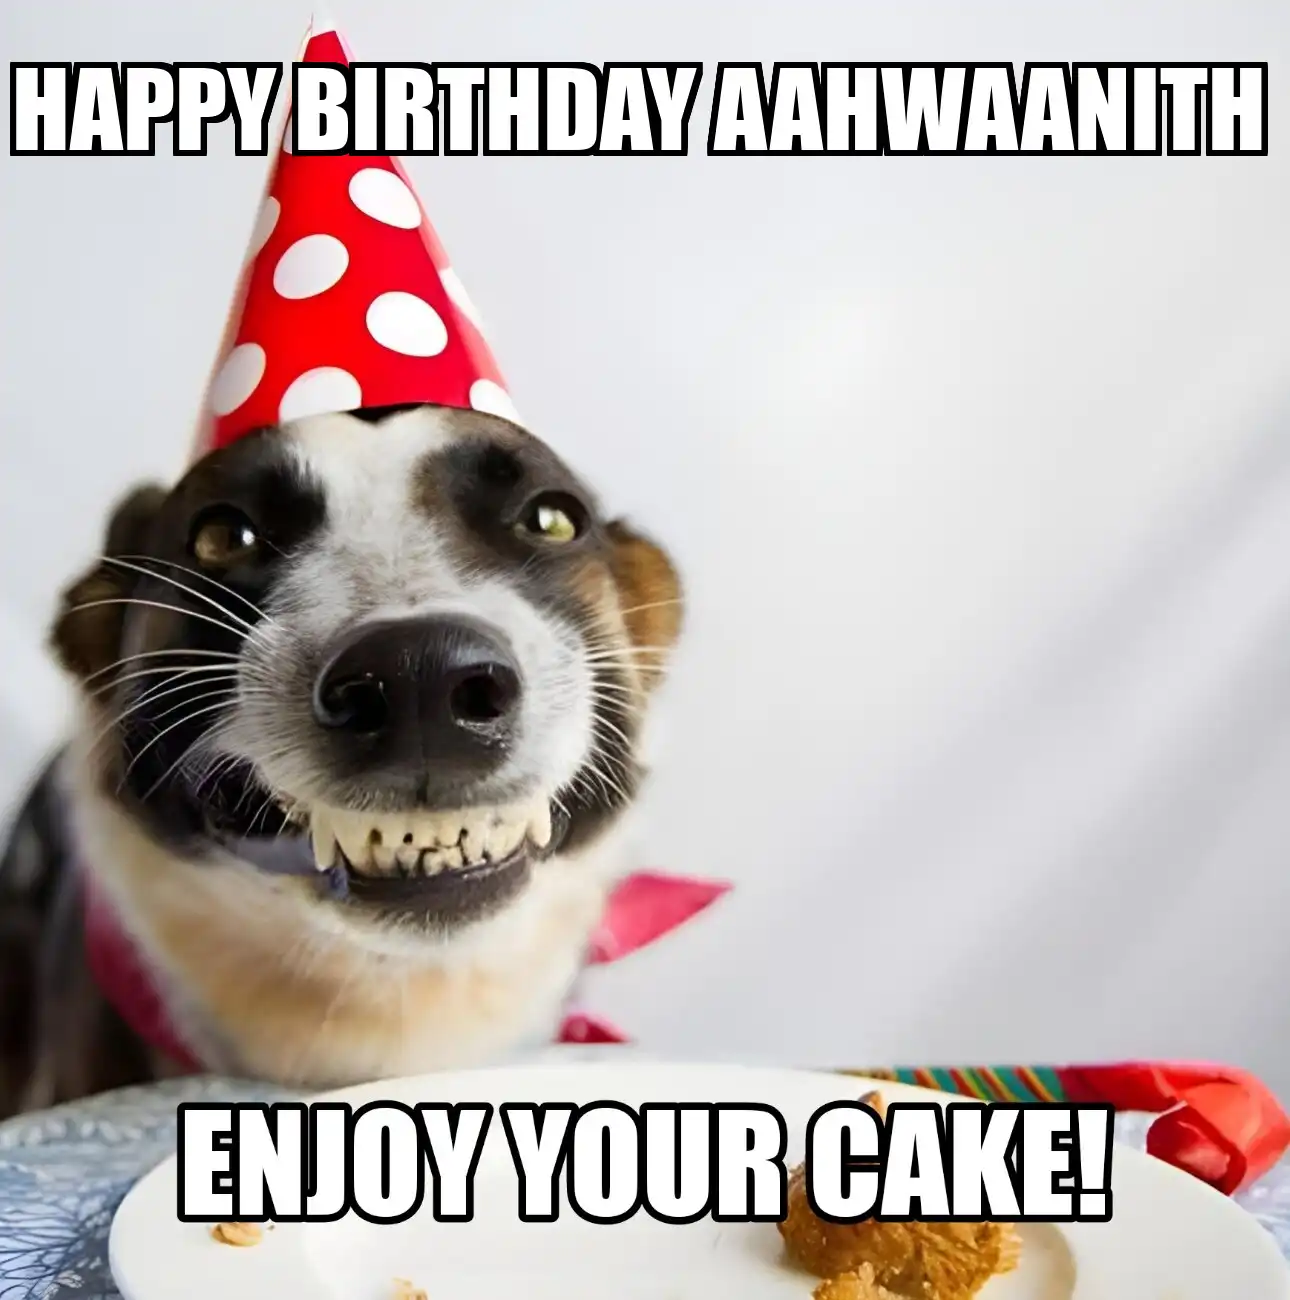 Happy Birthday Aahwaanith Enjoy Your Cake Dog Meme